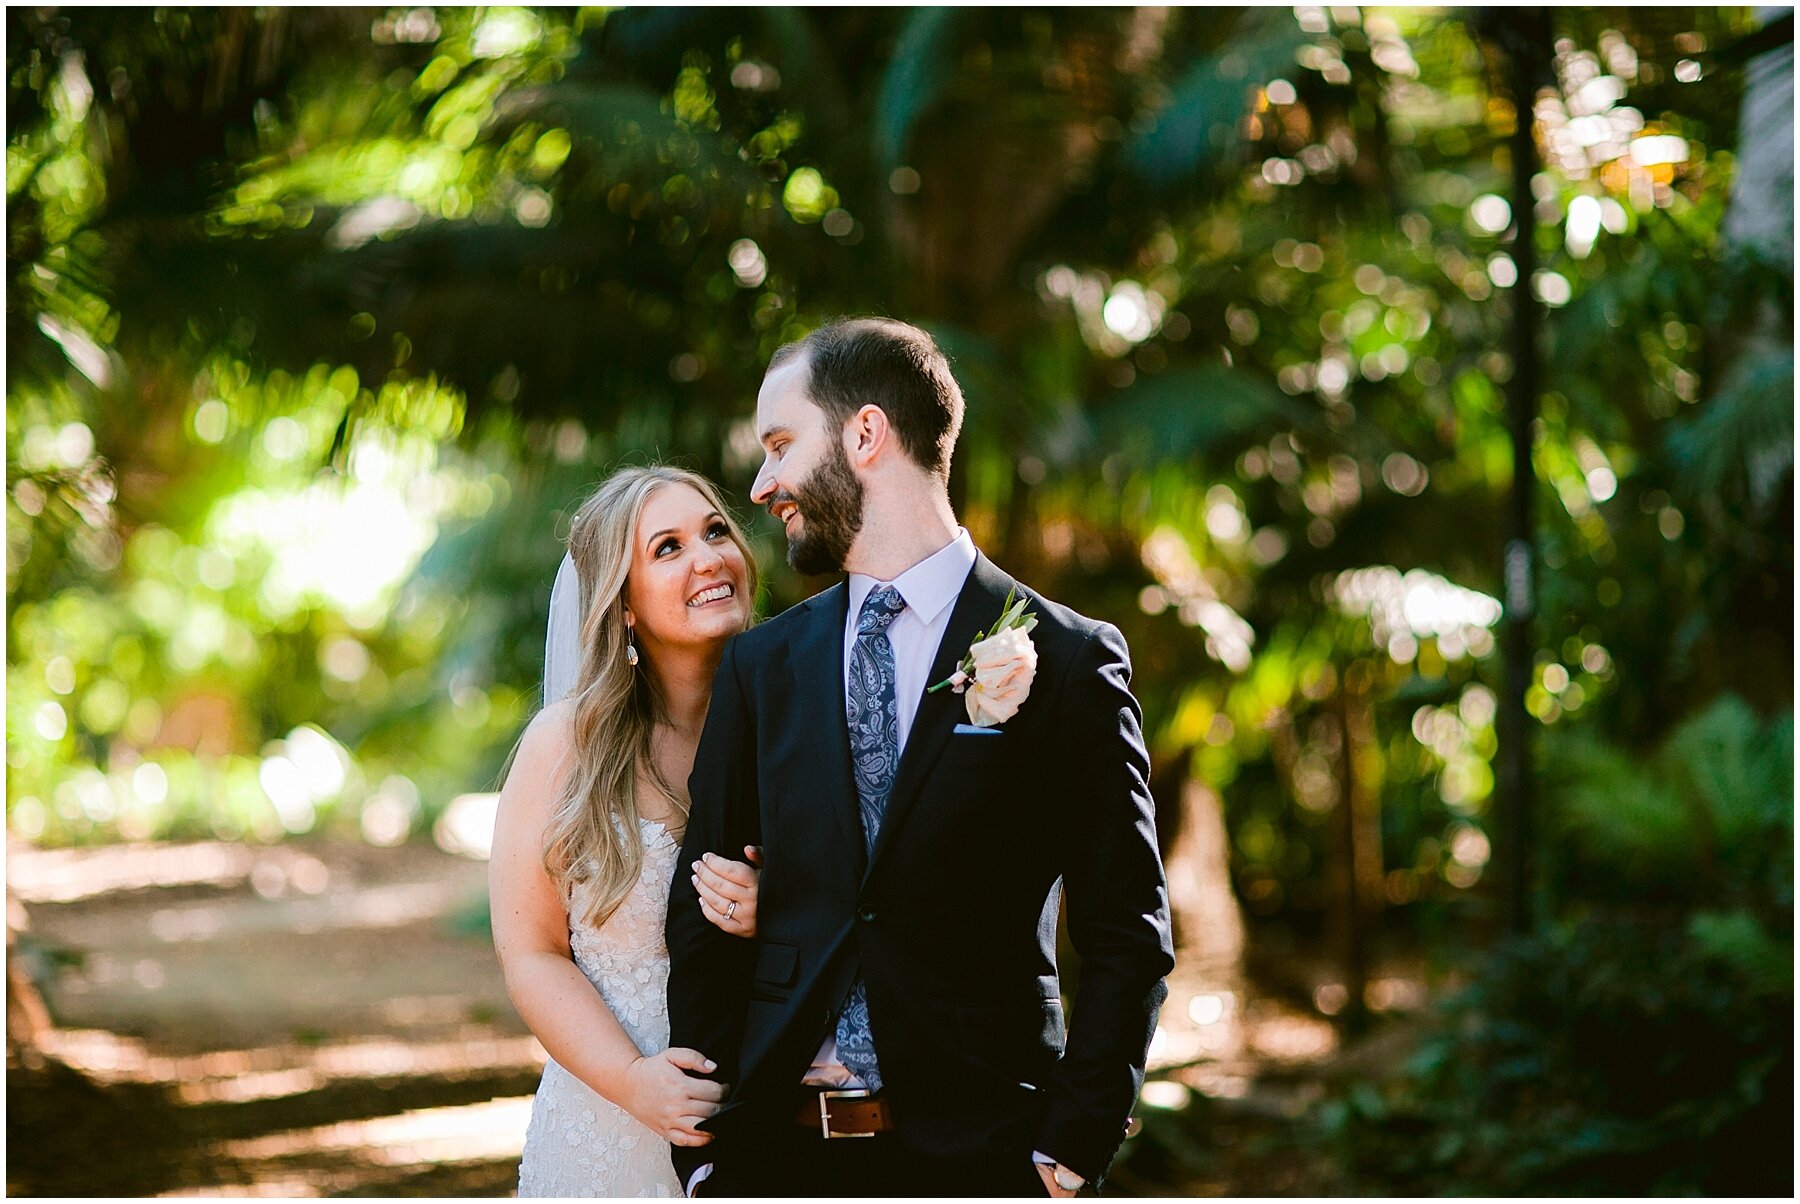 Tropical Grove | Perth Wedding Photography